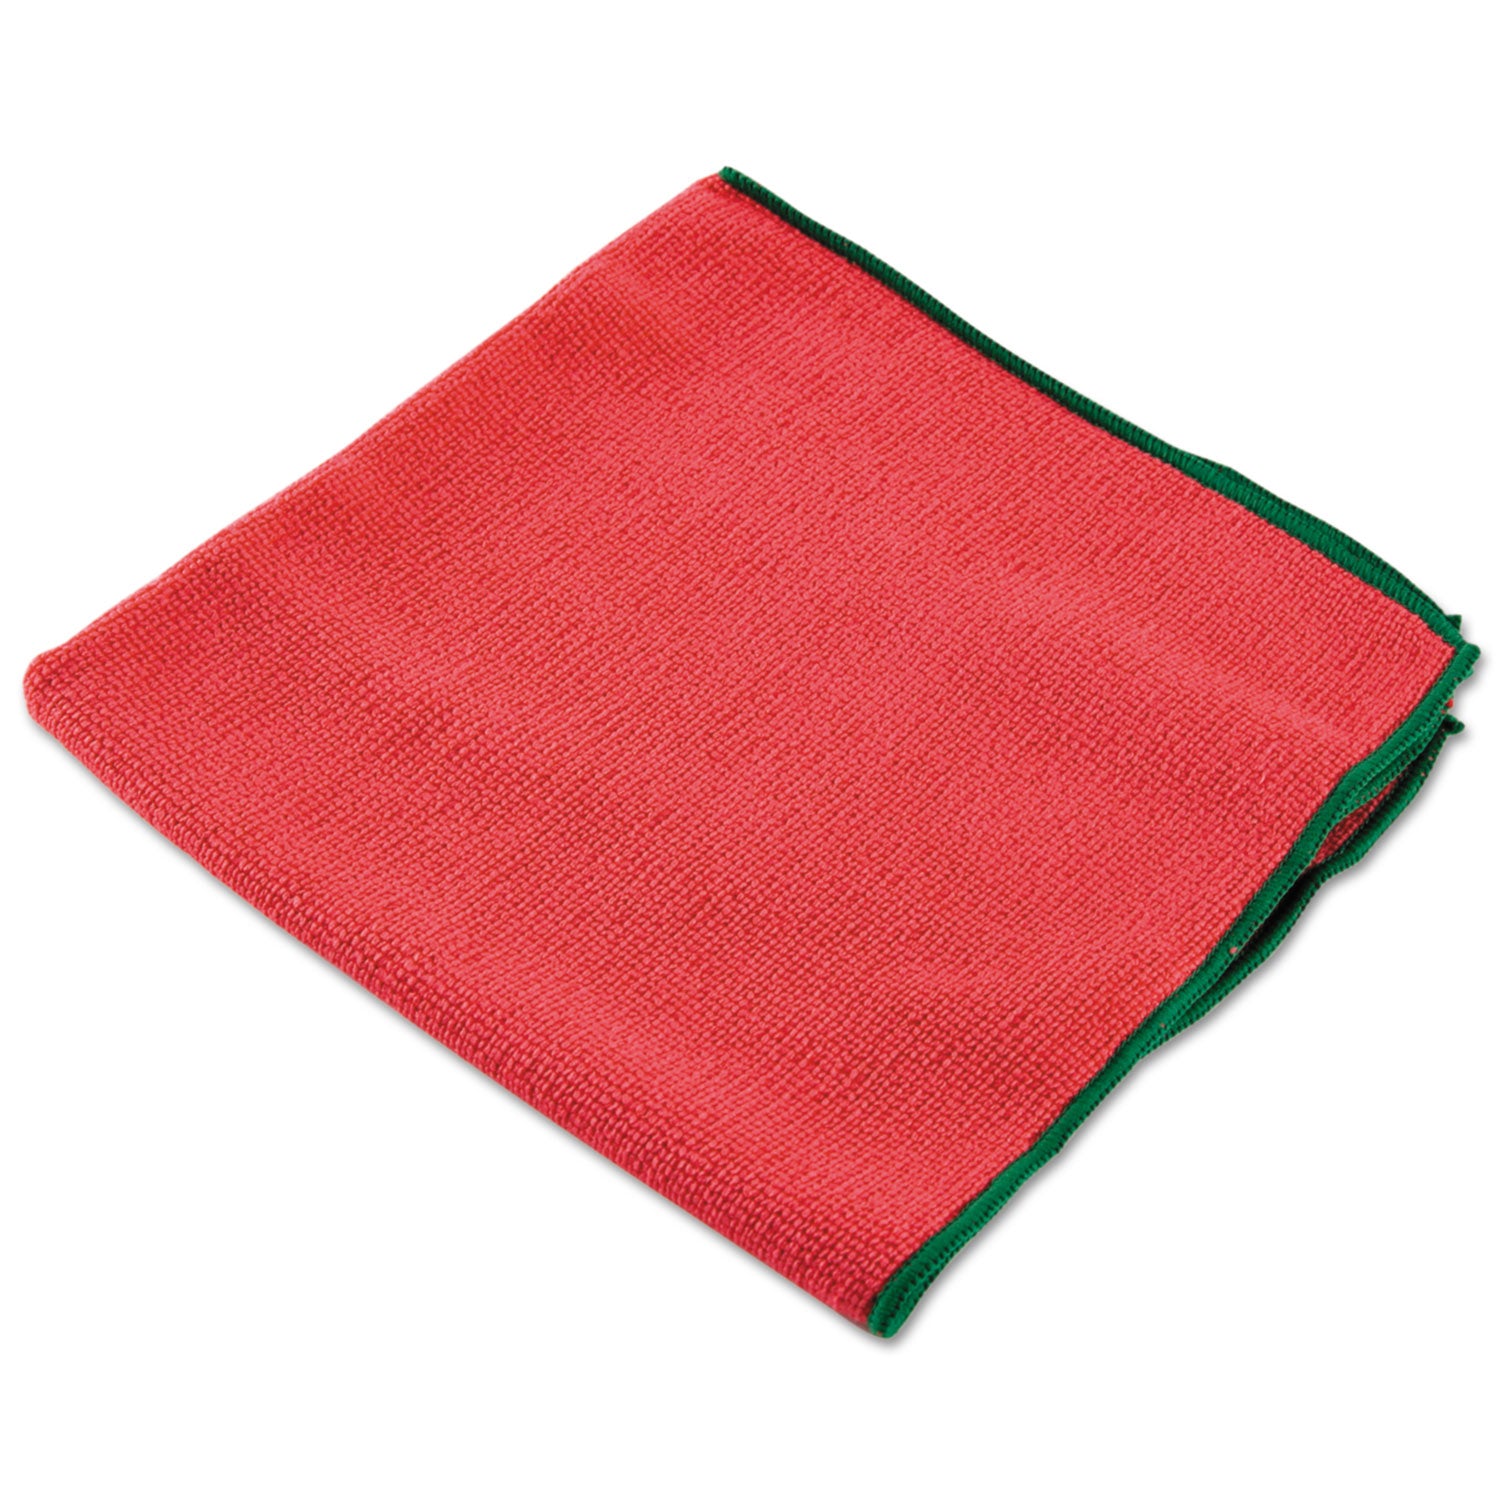 microfiber-cloths-reusable-1575-x-1575-red-6-pack-4-packs-carton_kcc83980 - 3